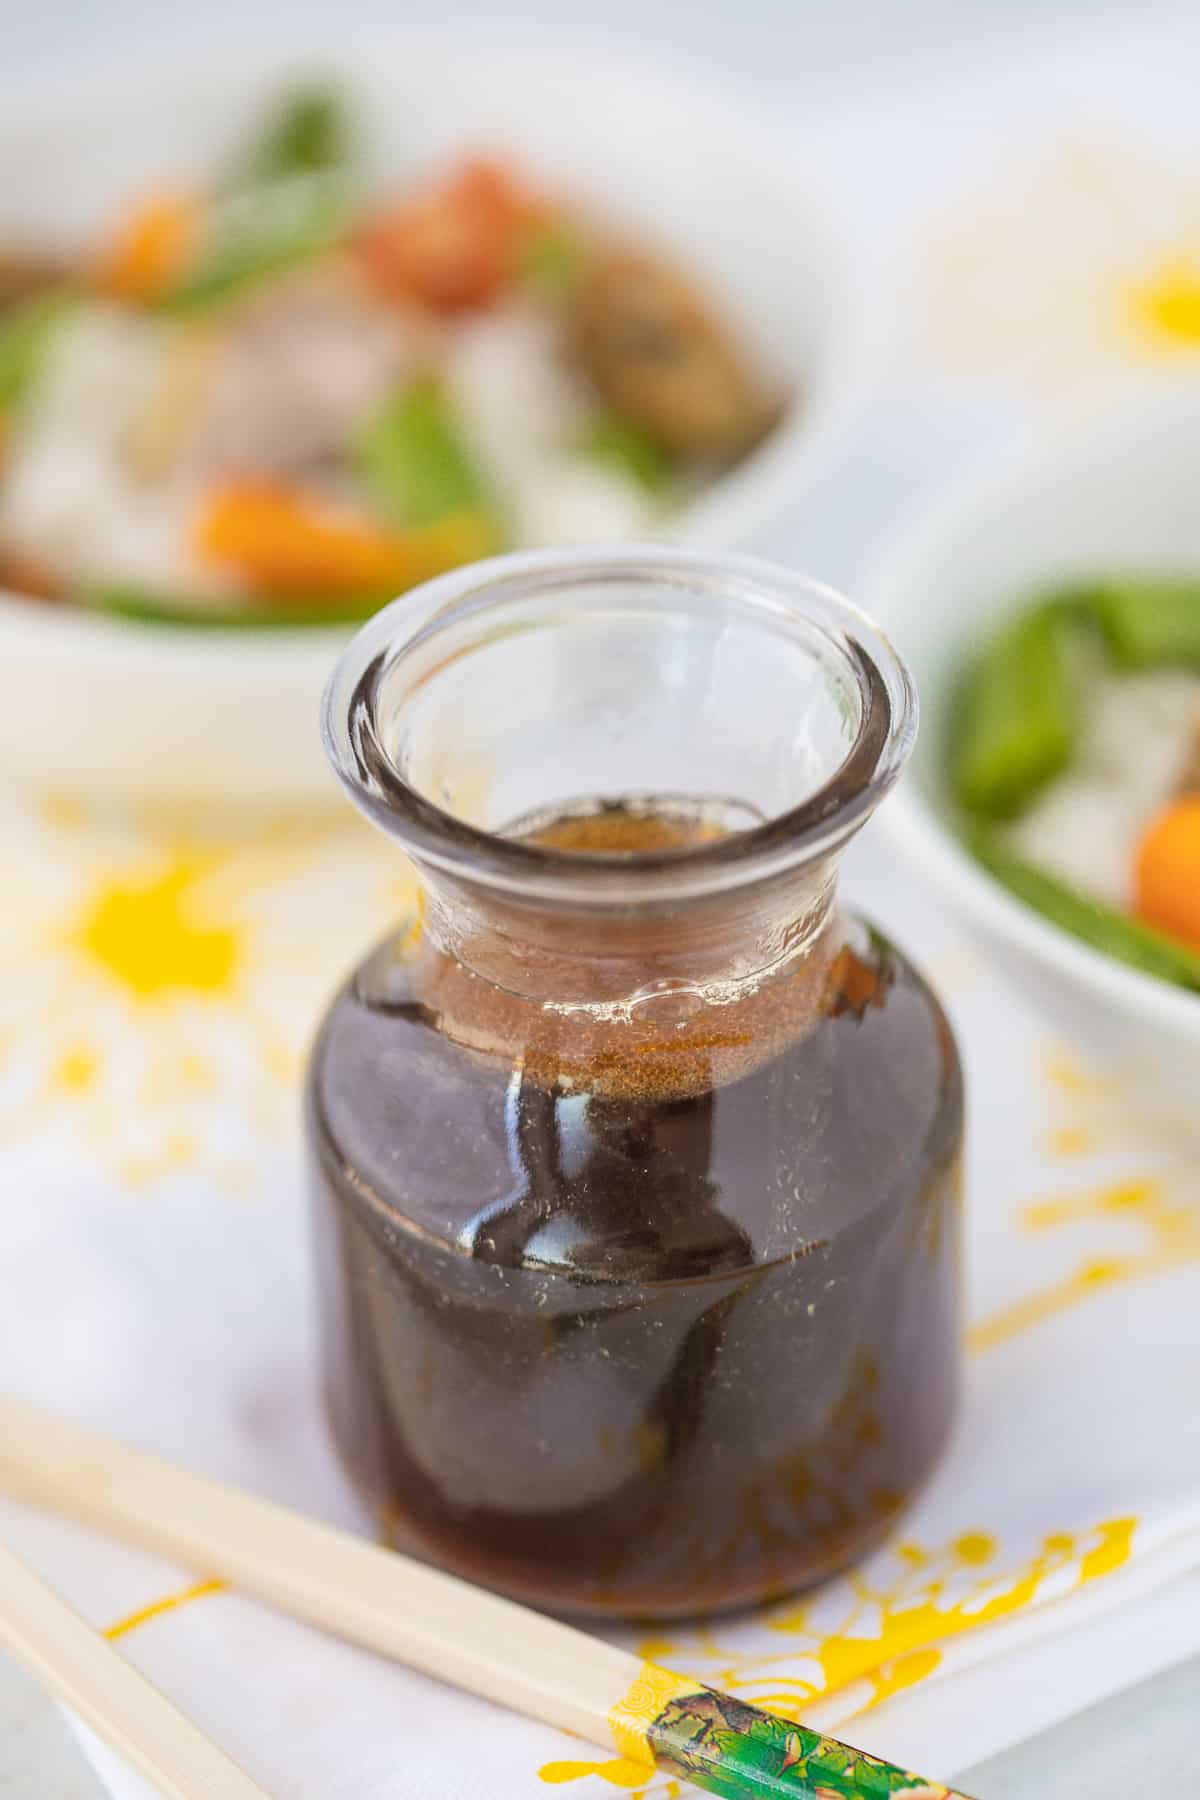 gluten-free stir fry sauce in a small jar